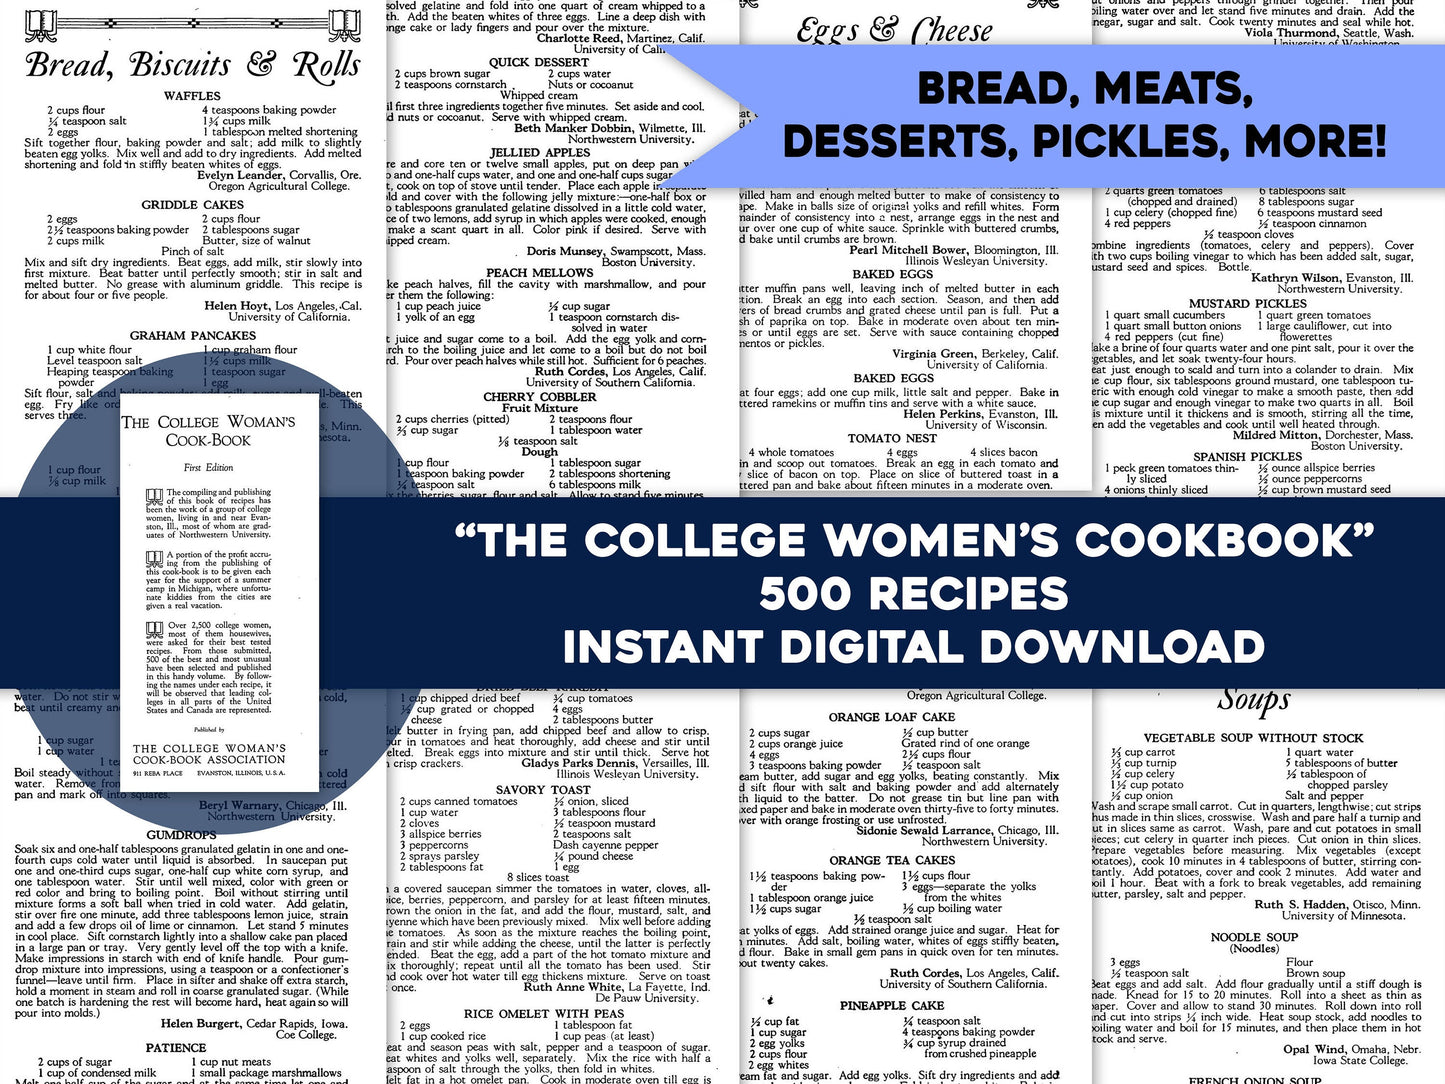 The College Women's Cookbook [500 Recipes]